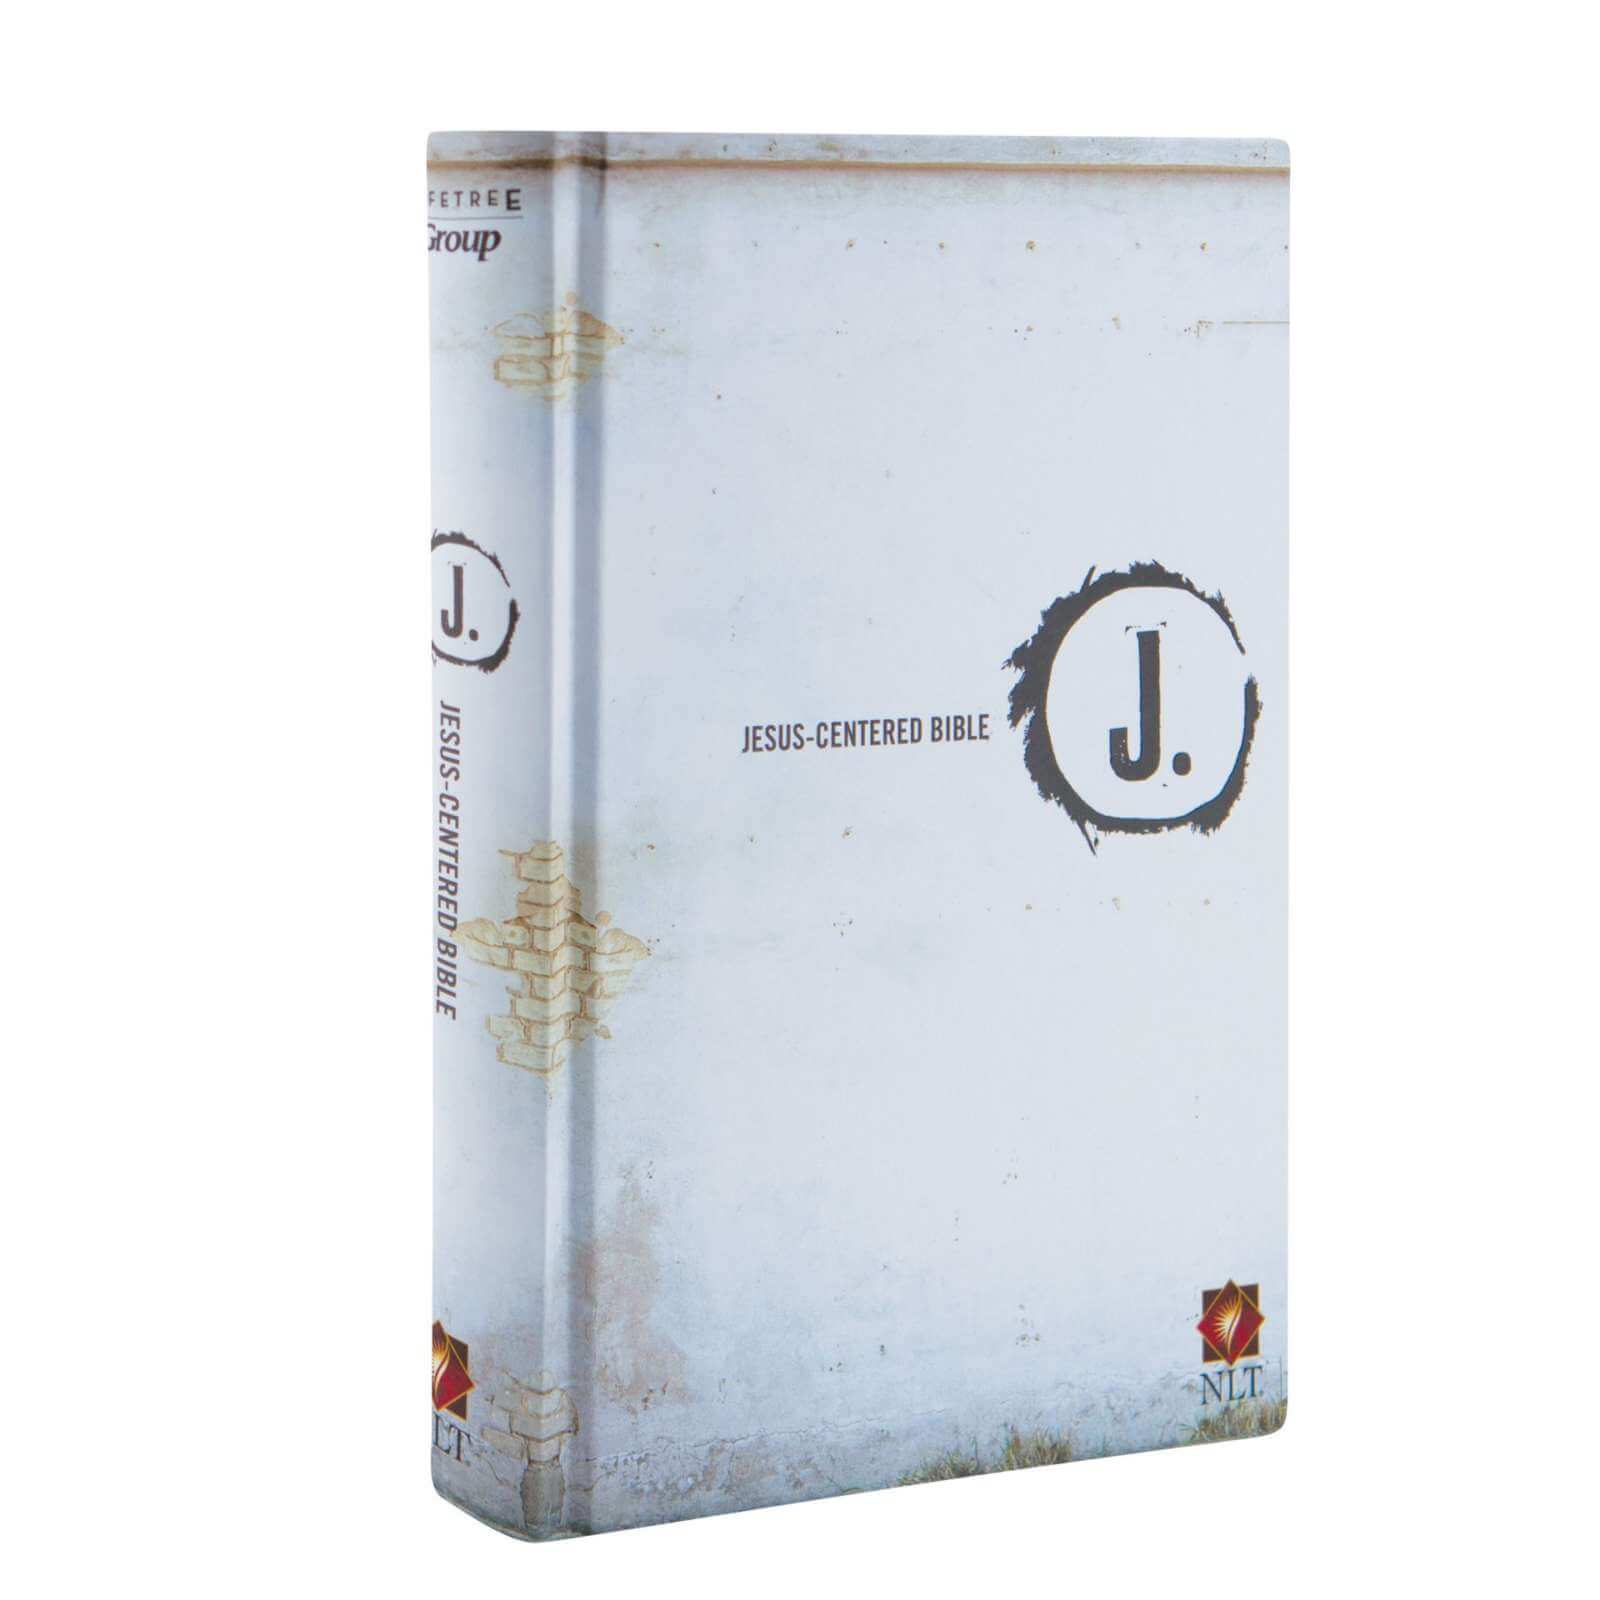 Jesus-Centered Bible NLT, Hardcover